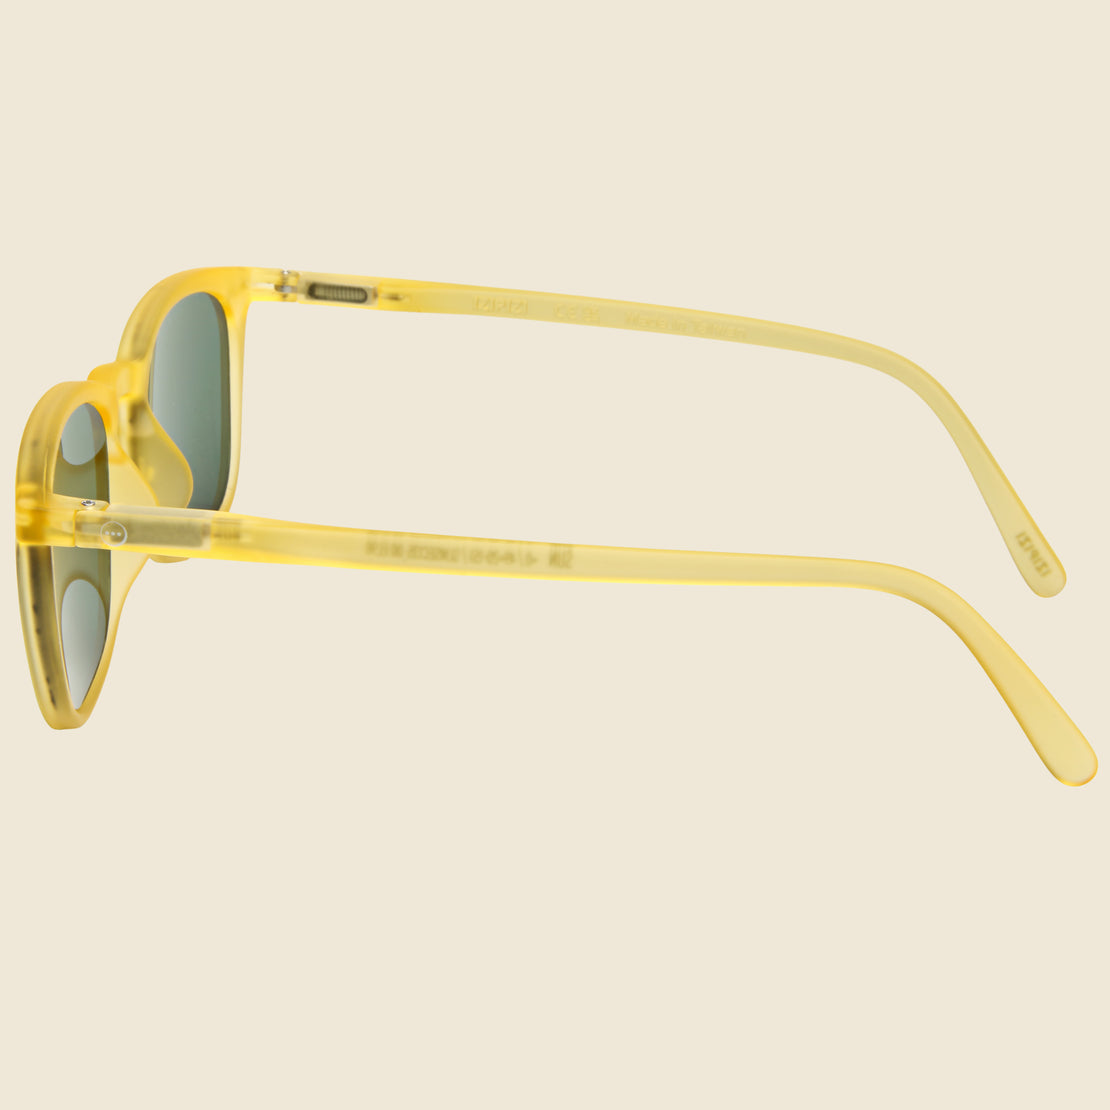 The Trapeze #E - Yellow Honey - Izipizi - STAG Provisions - Accessories - Eyewear